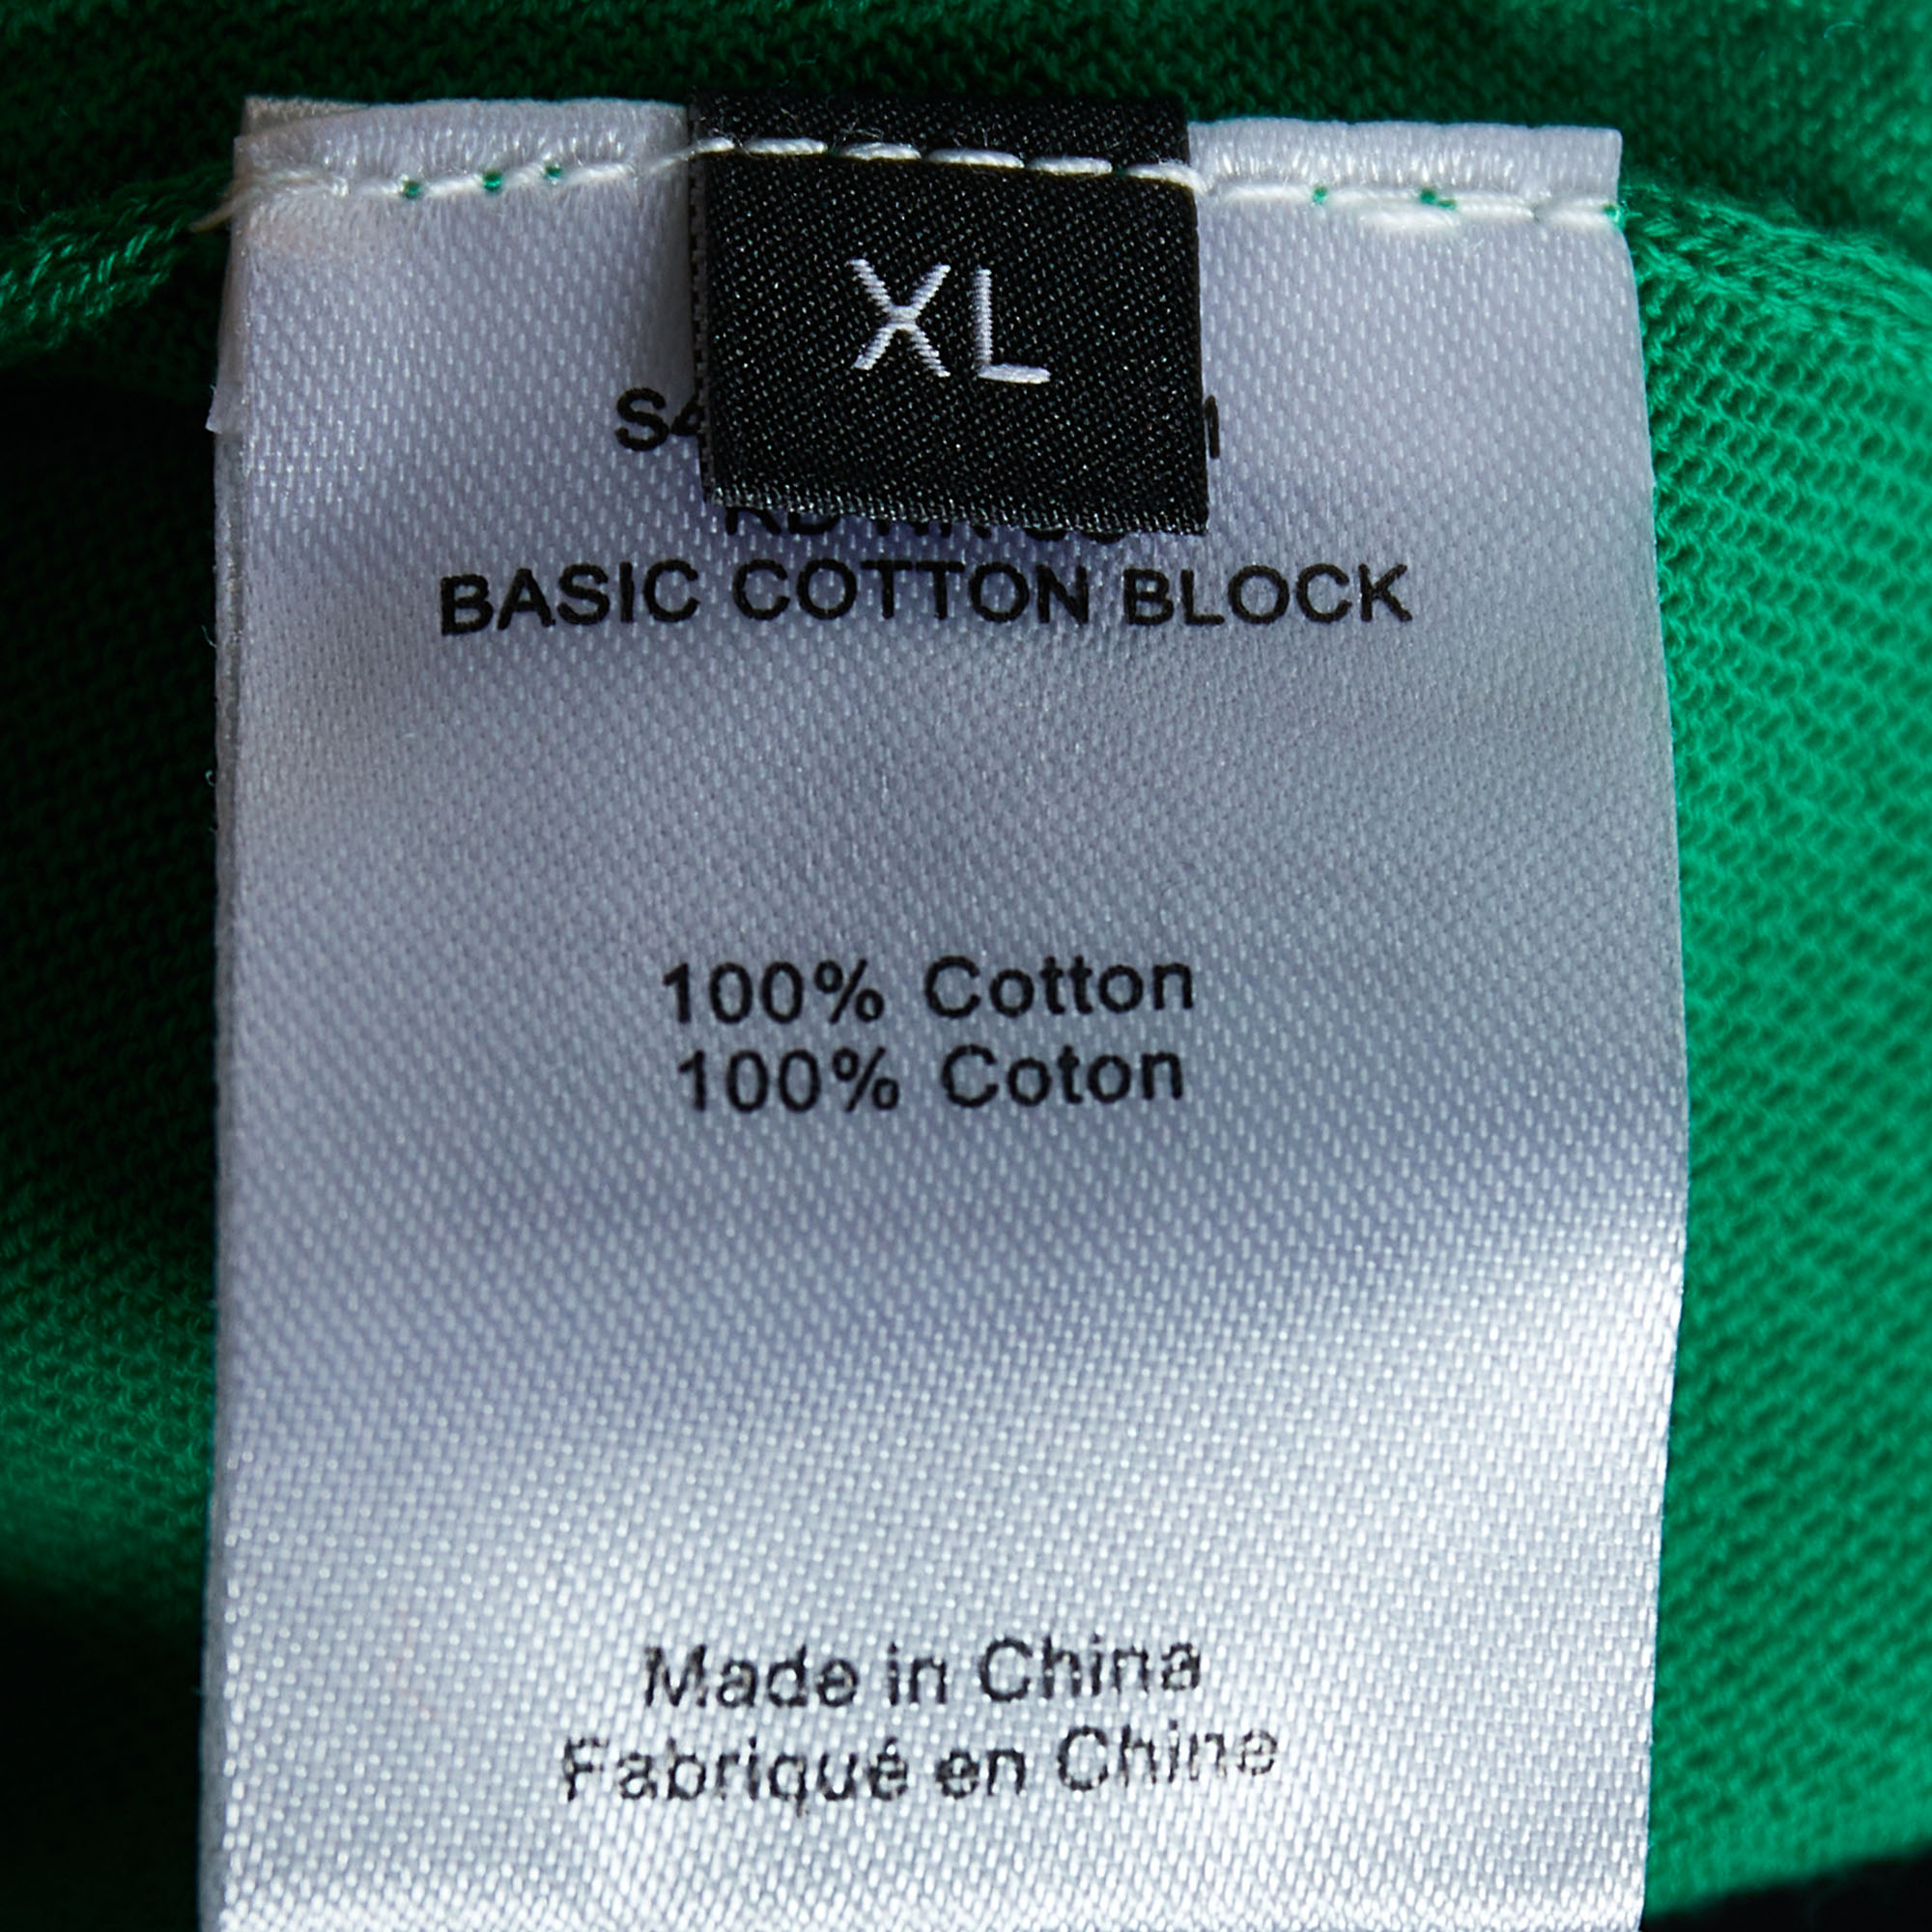 Joseph Color Block Cotton Knit Lightweight Sweater XL